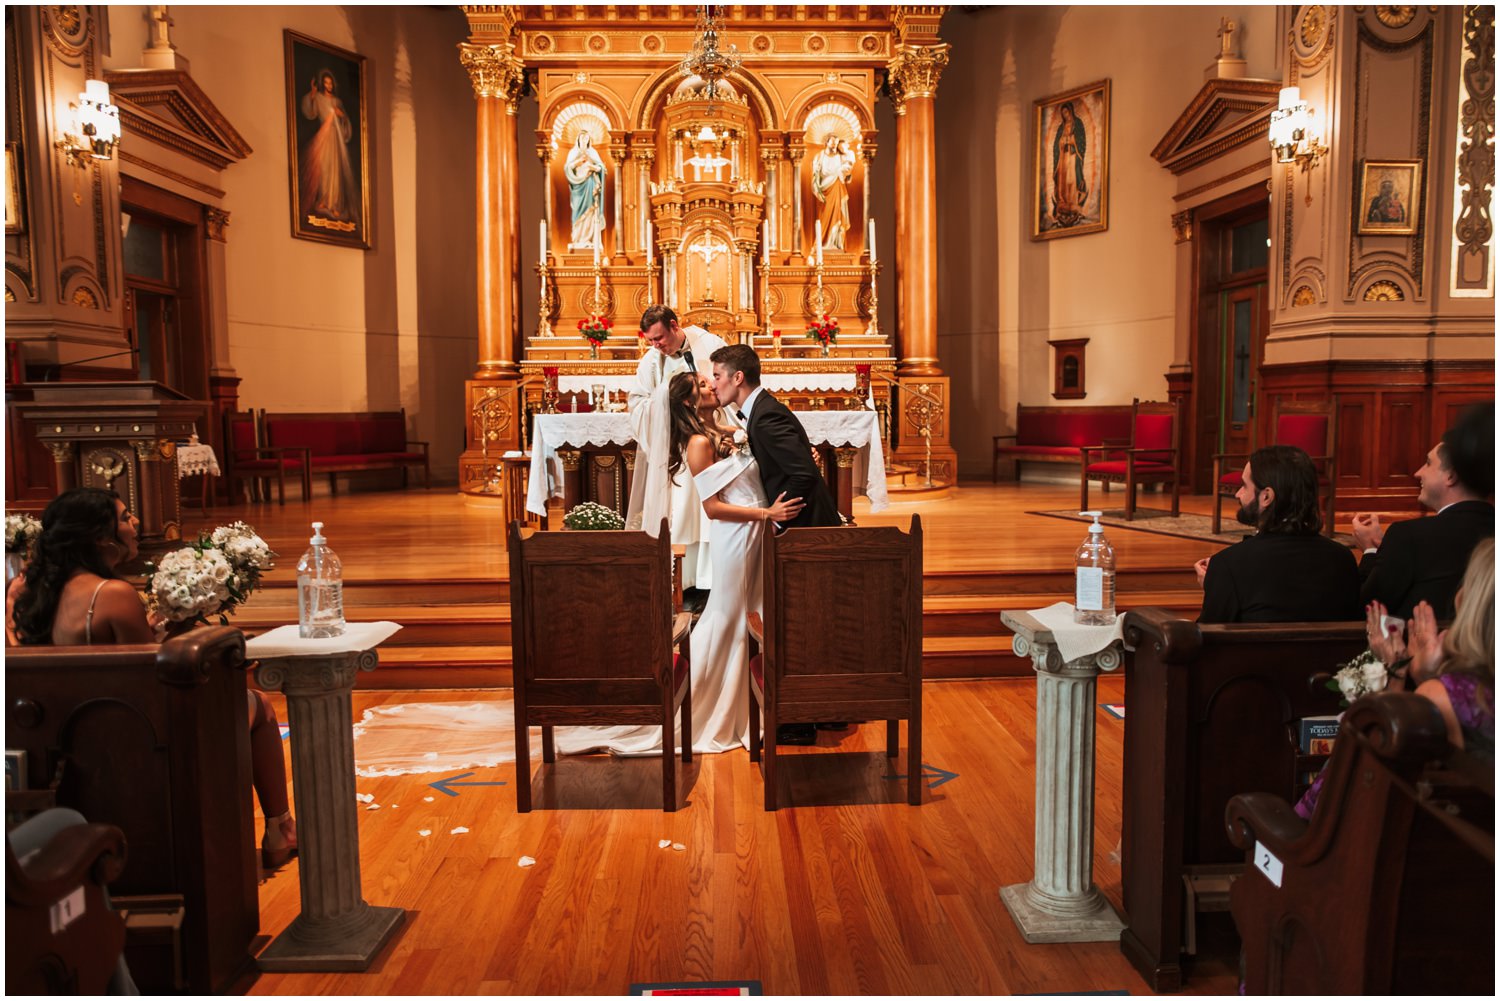 St. Hedwig Catholic Church Chicago wedding ceremony photos